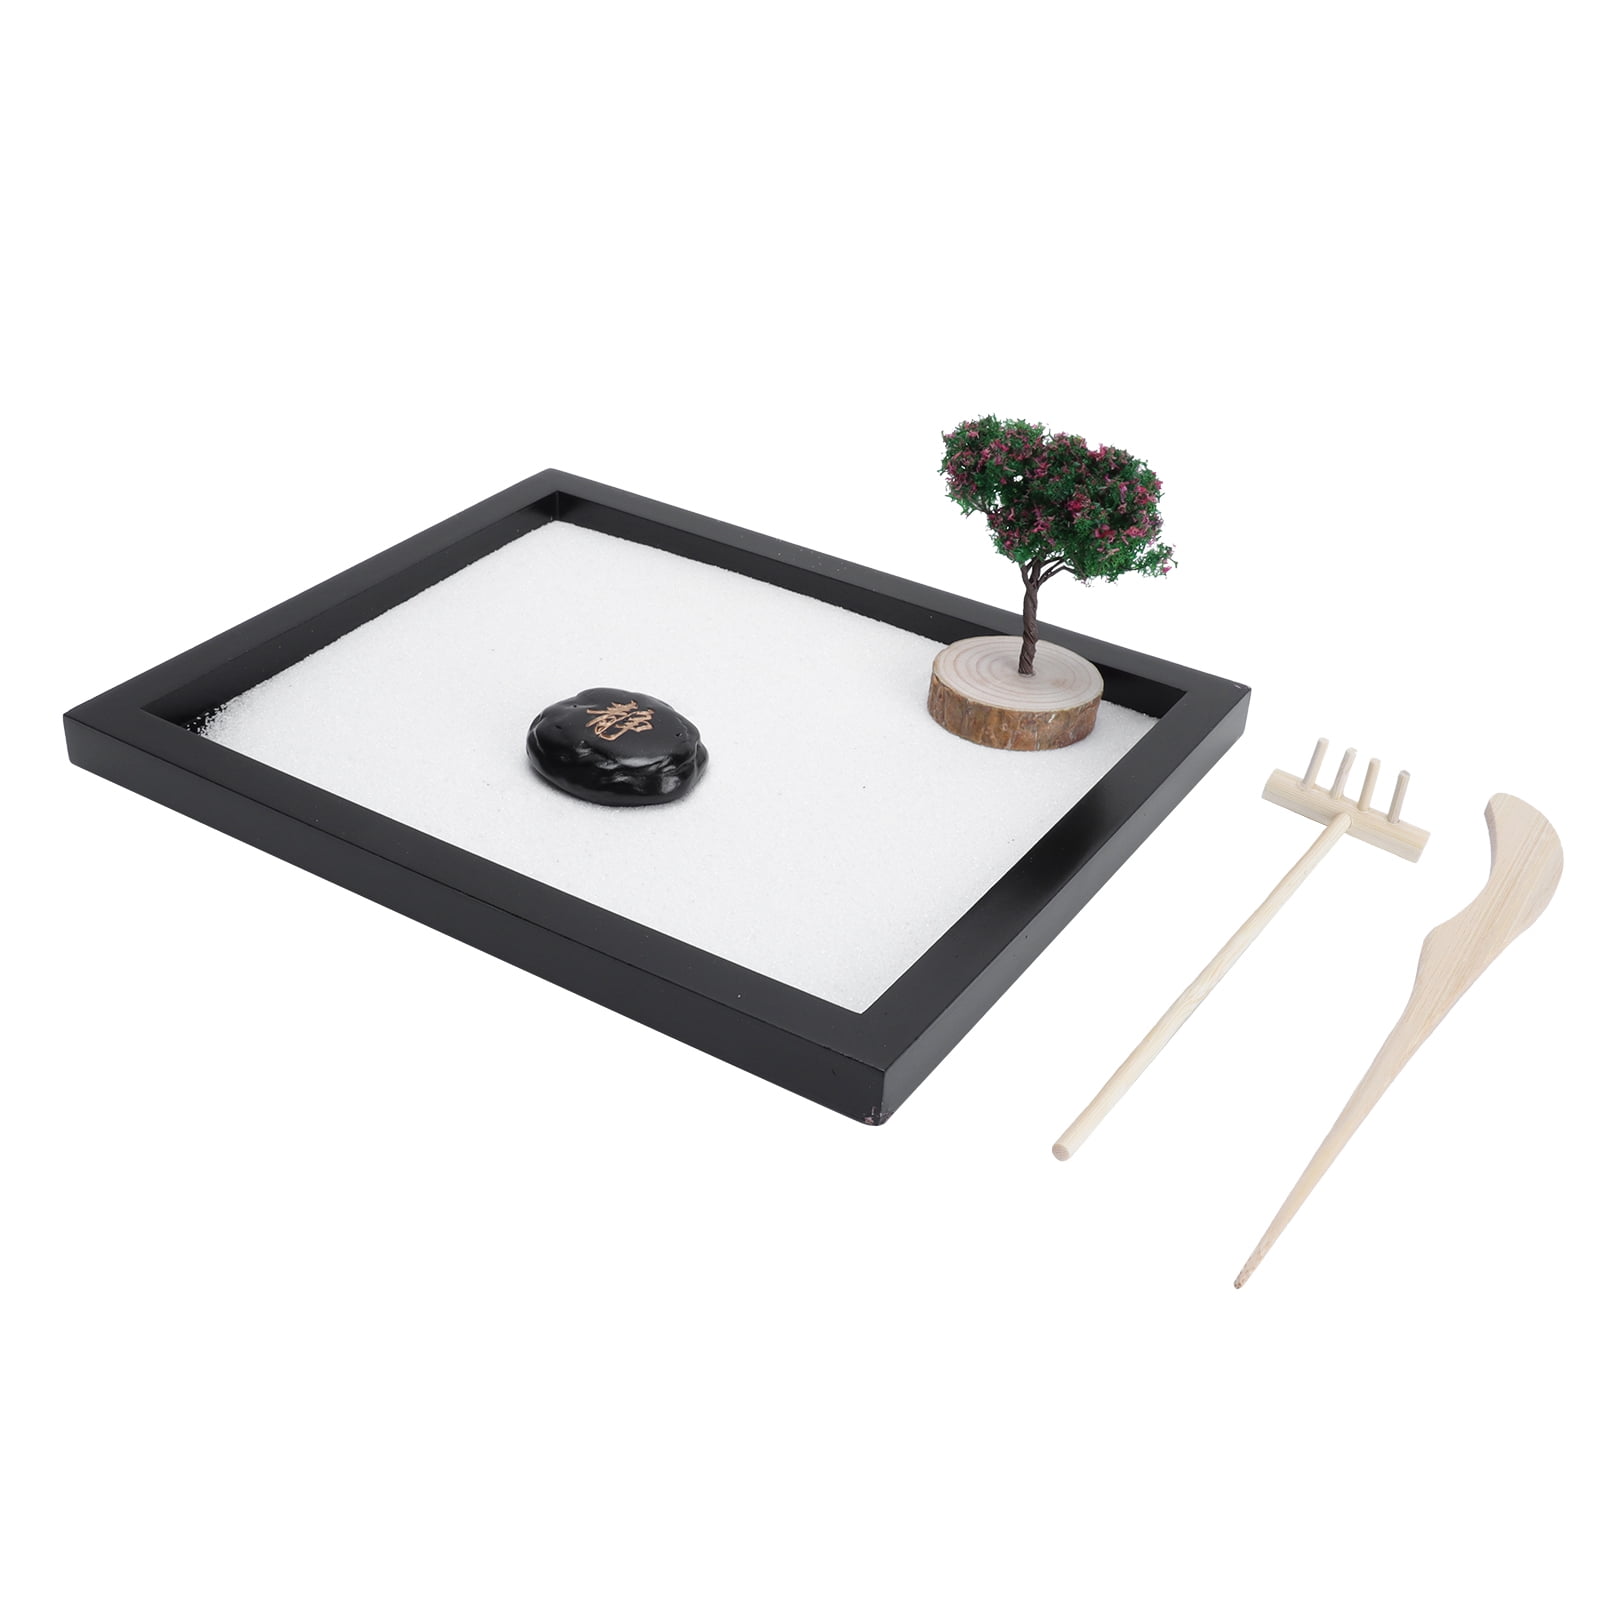 Details about   Zen Garden Kit Mini Meditation Japanese Style Sand Tray Tabletop Decorations 